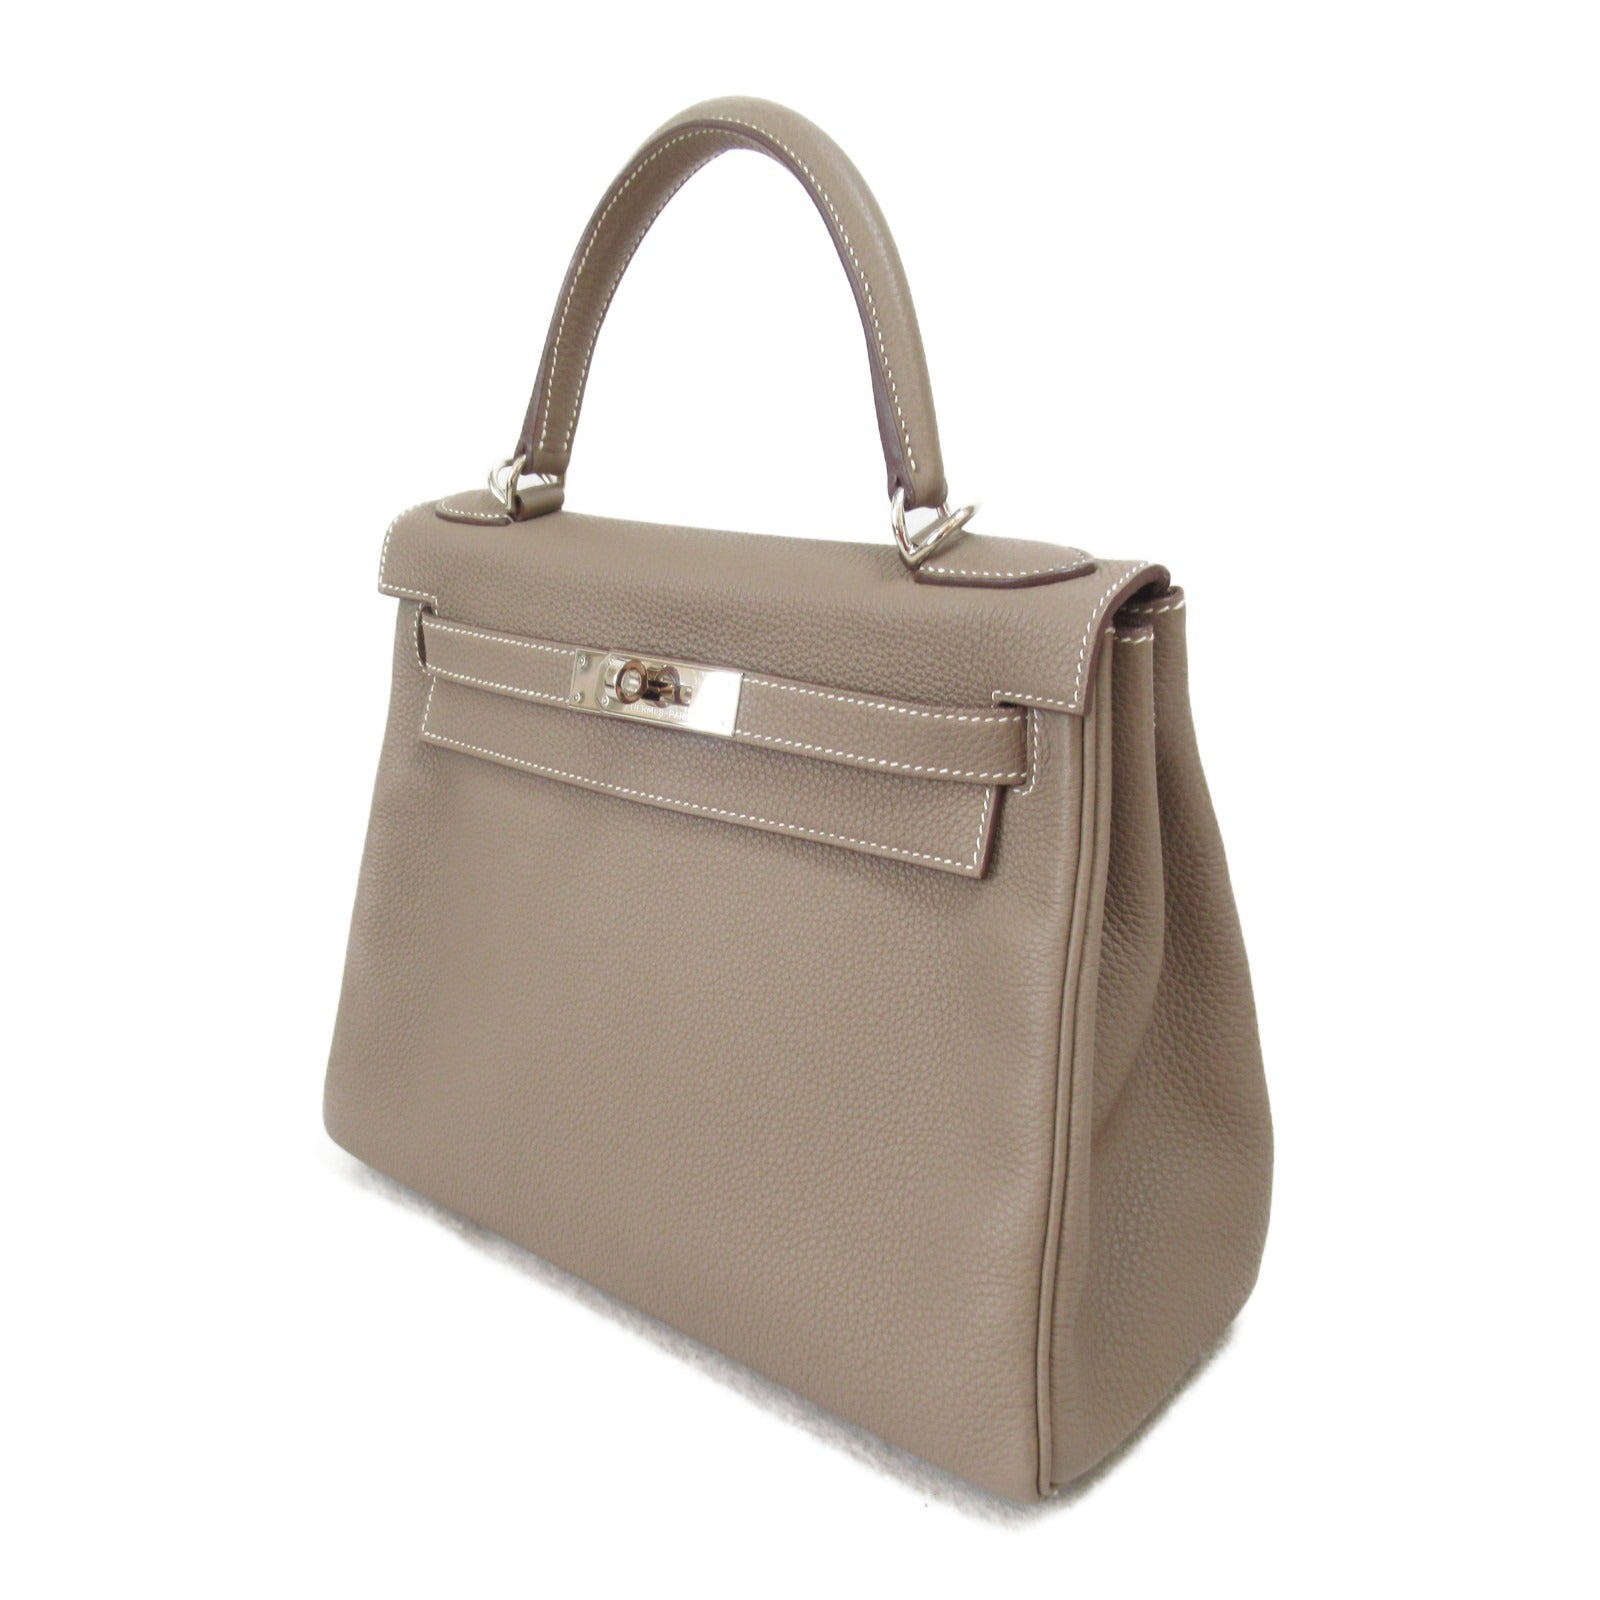 Hermes Kelly 28 Etoupe Handbag Handbag Handbag TOGO LADY GREY